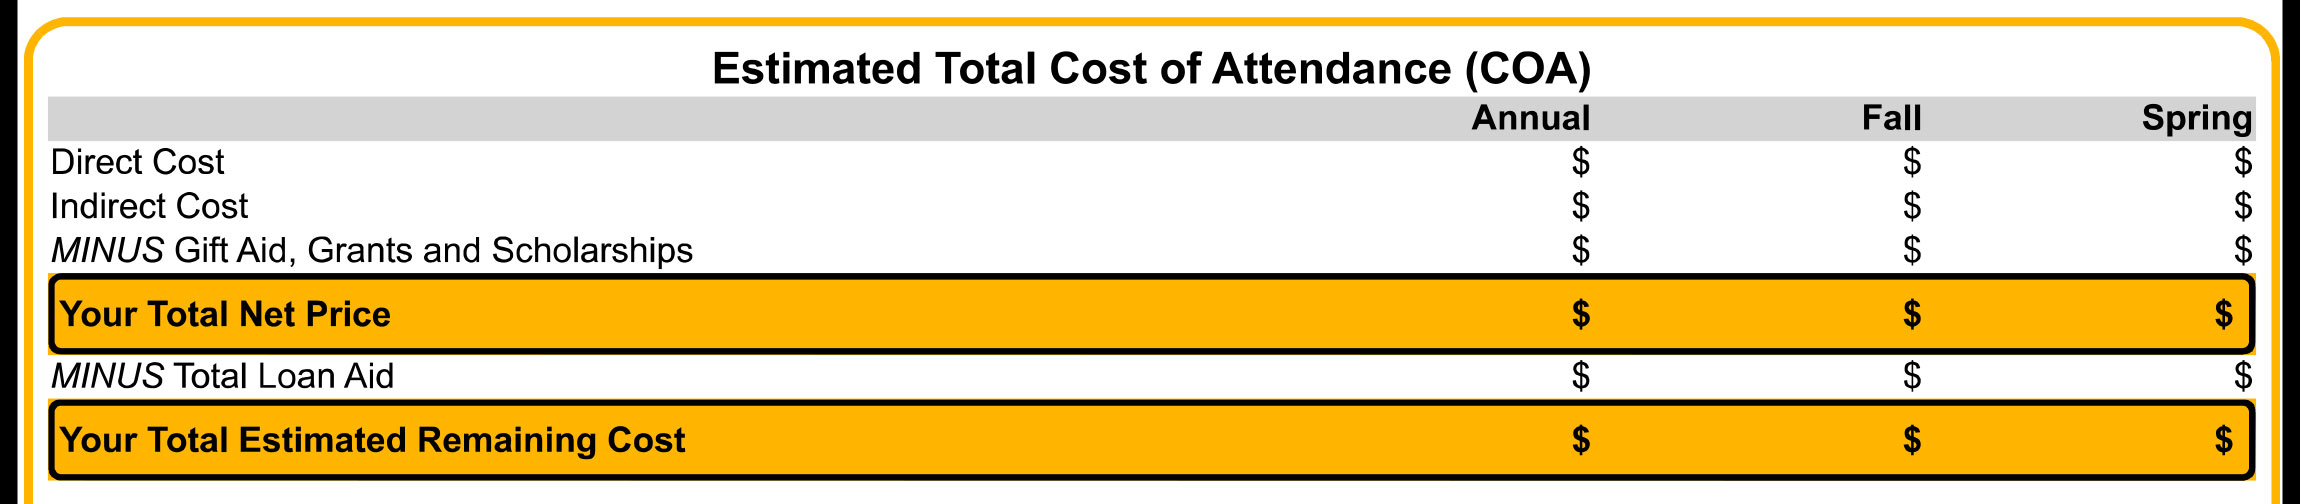 Estimated Total Cost of Attendance (COA)